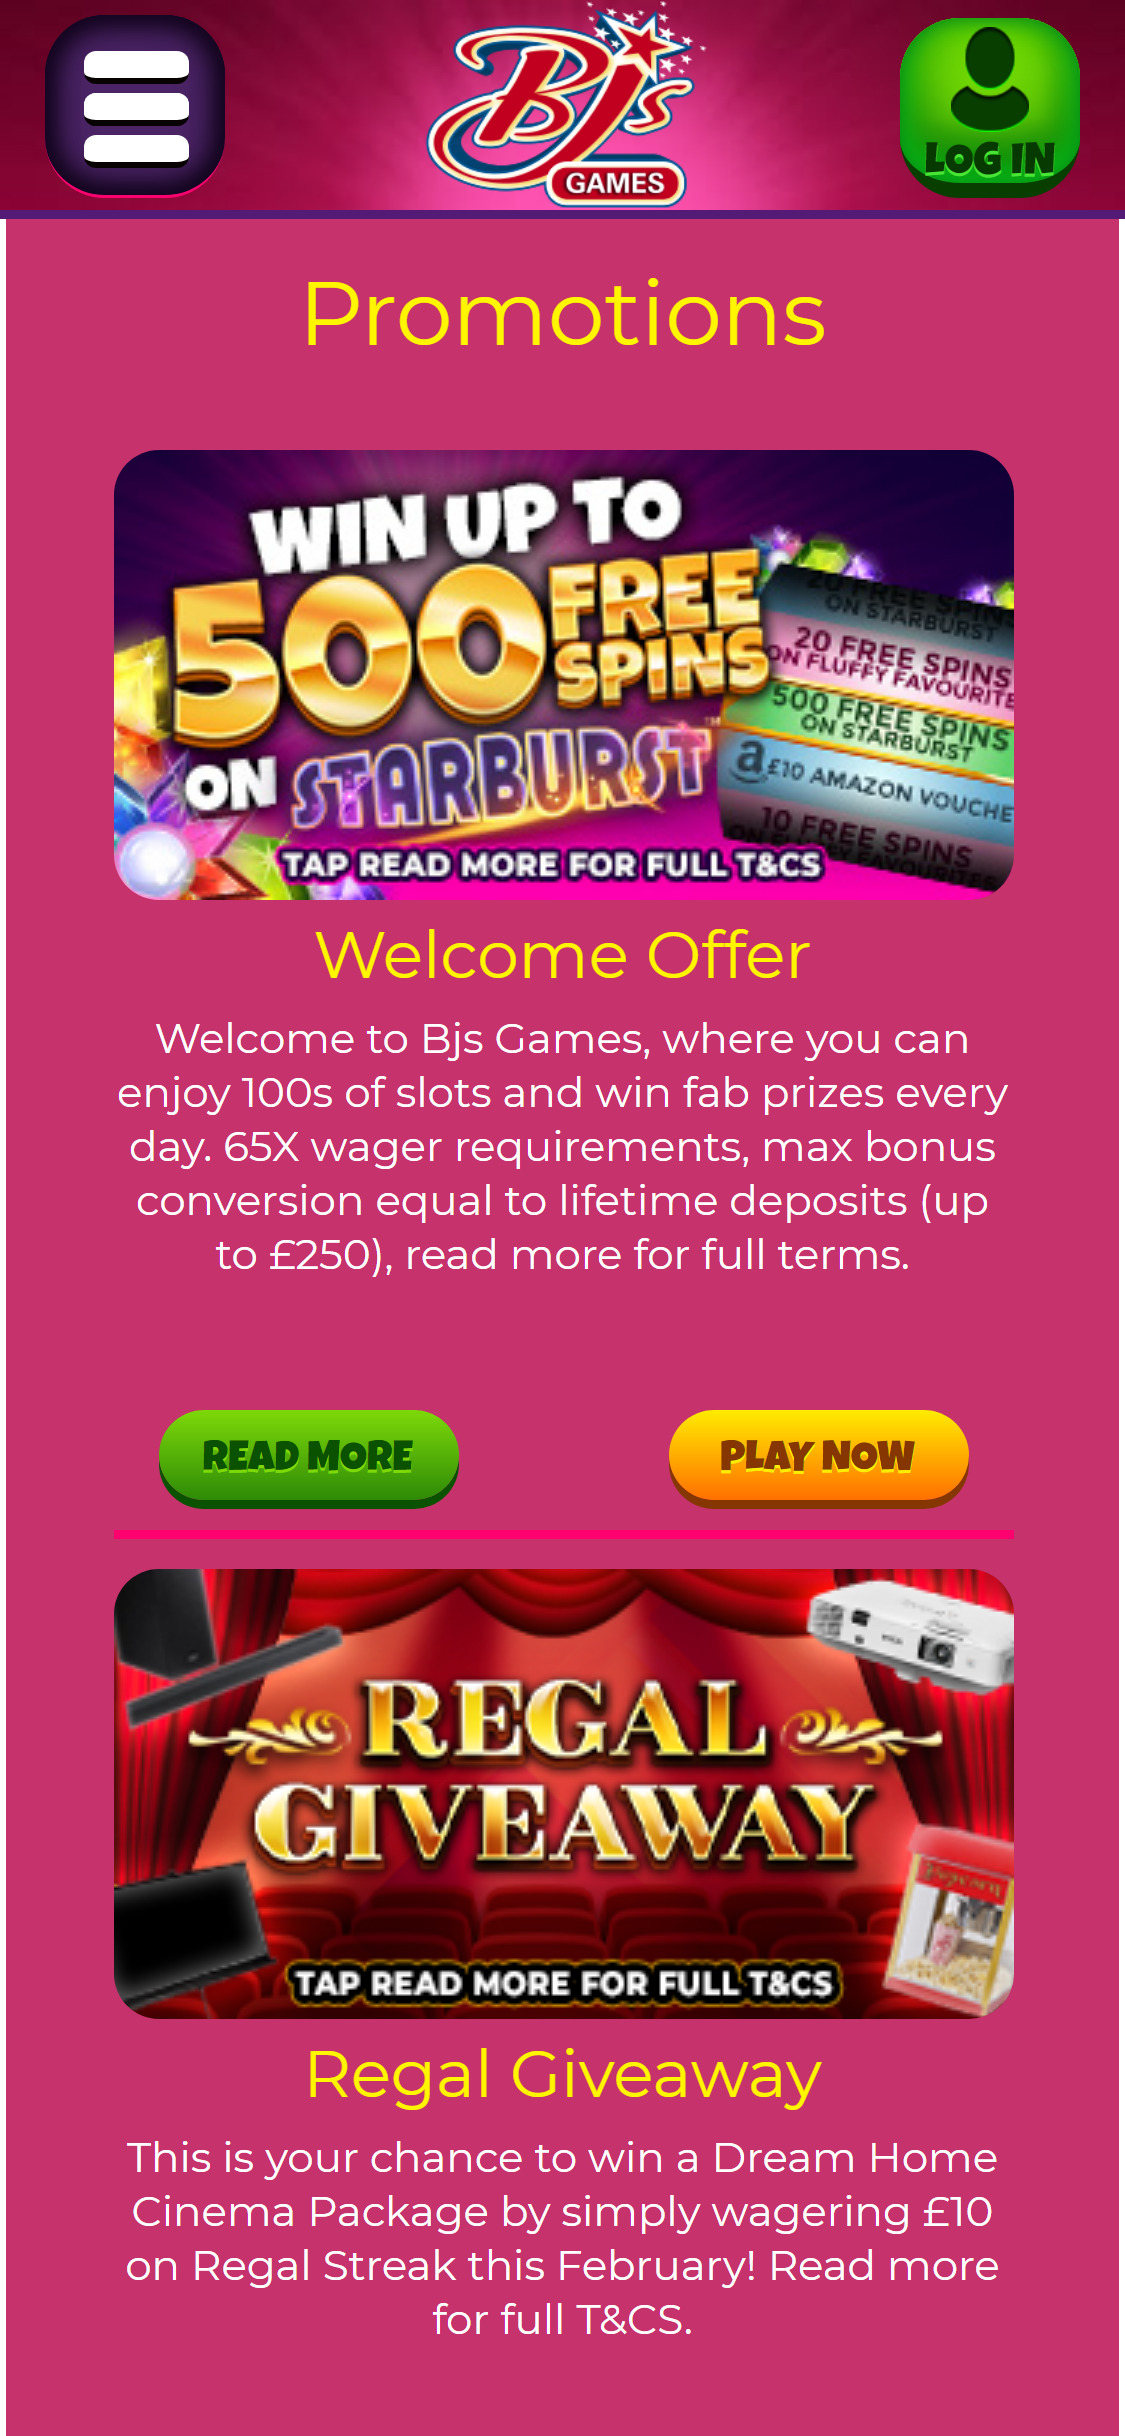 Bjs Games Casino Mobile No Deposit Bonus Review